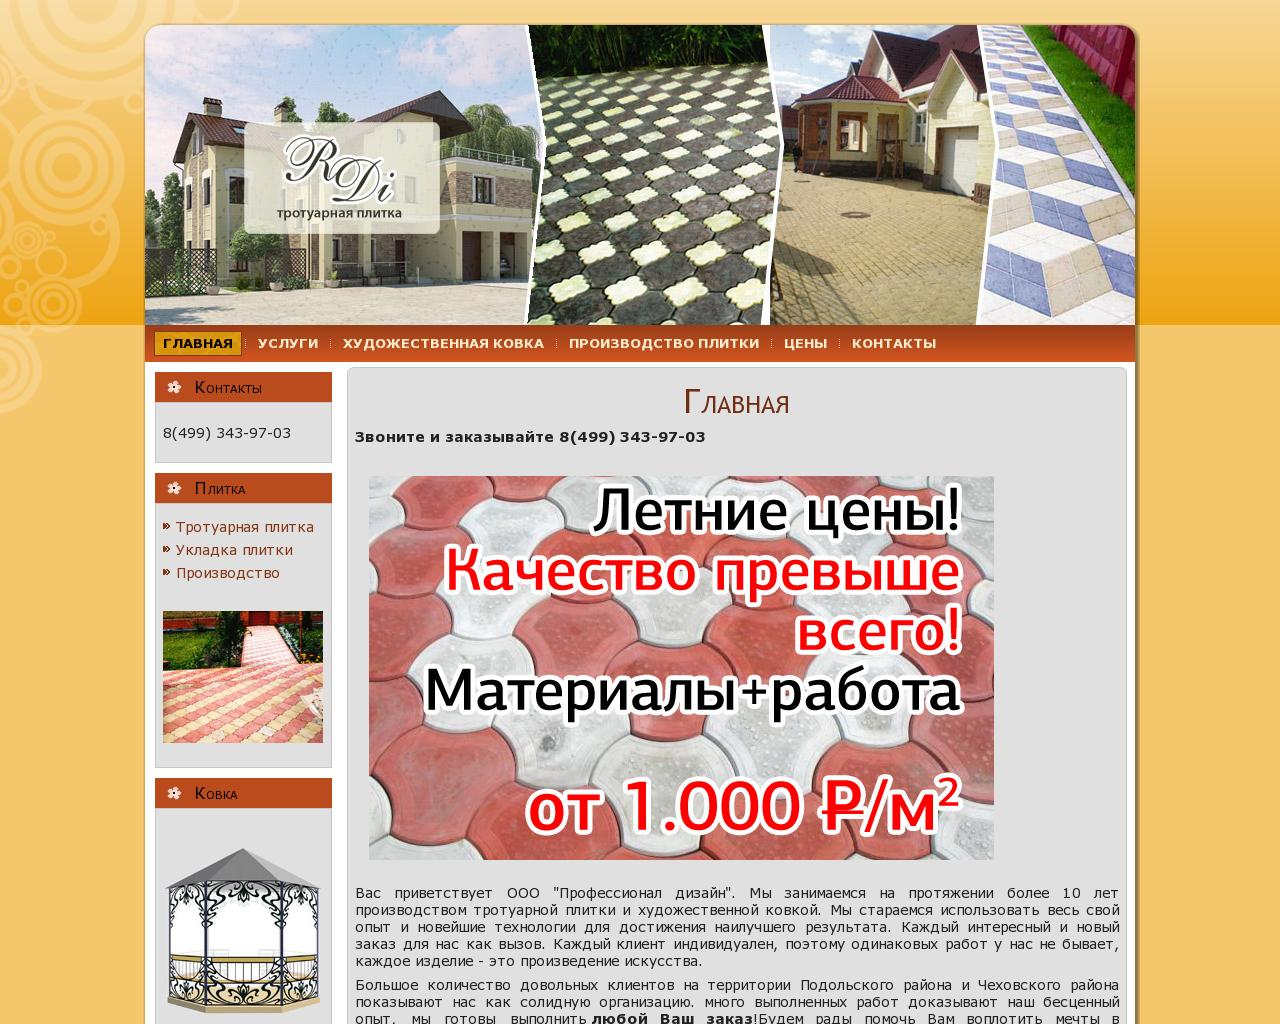 Изображение сайта rodi77.ru в разрешении 1280x1024